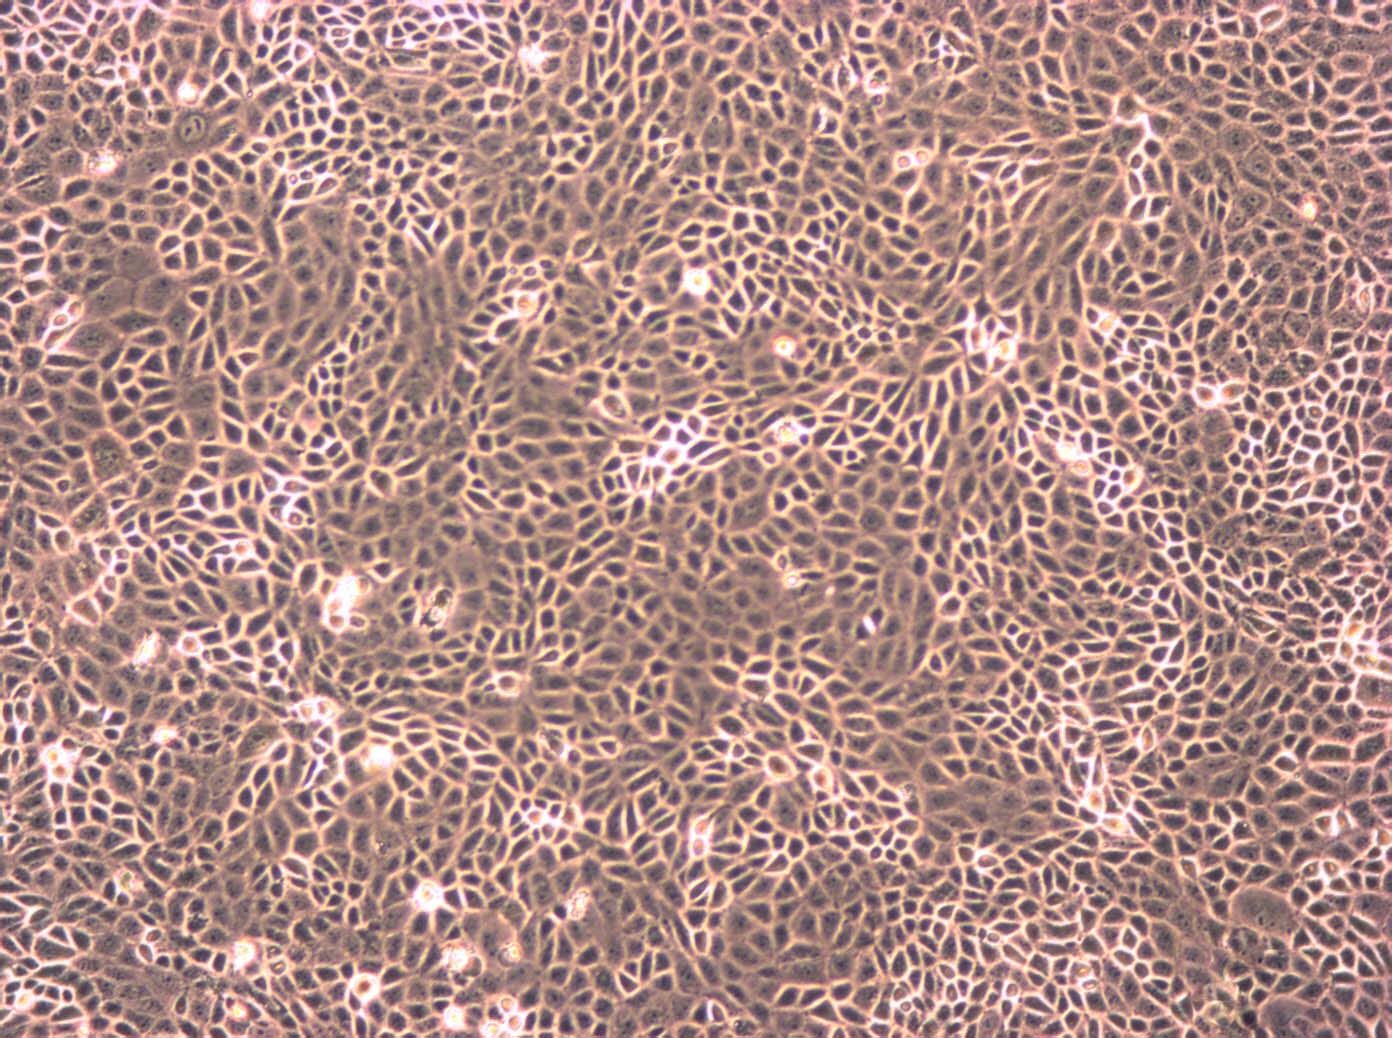 6-10B epithelioid cells人鼻咽癌细胞系,6-10B epithelioid cells